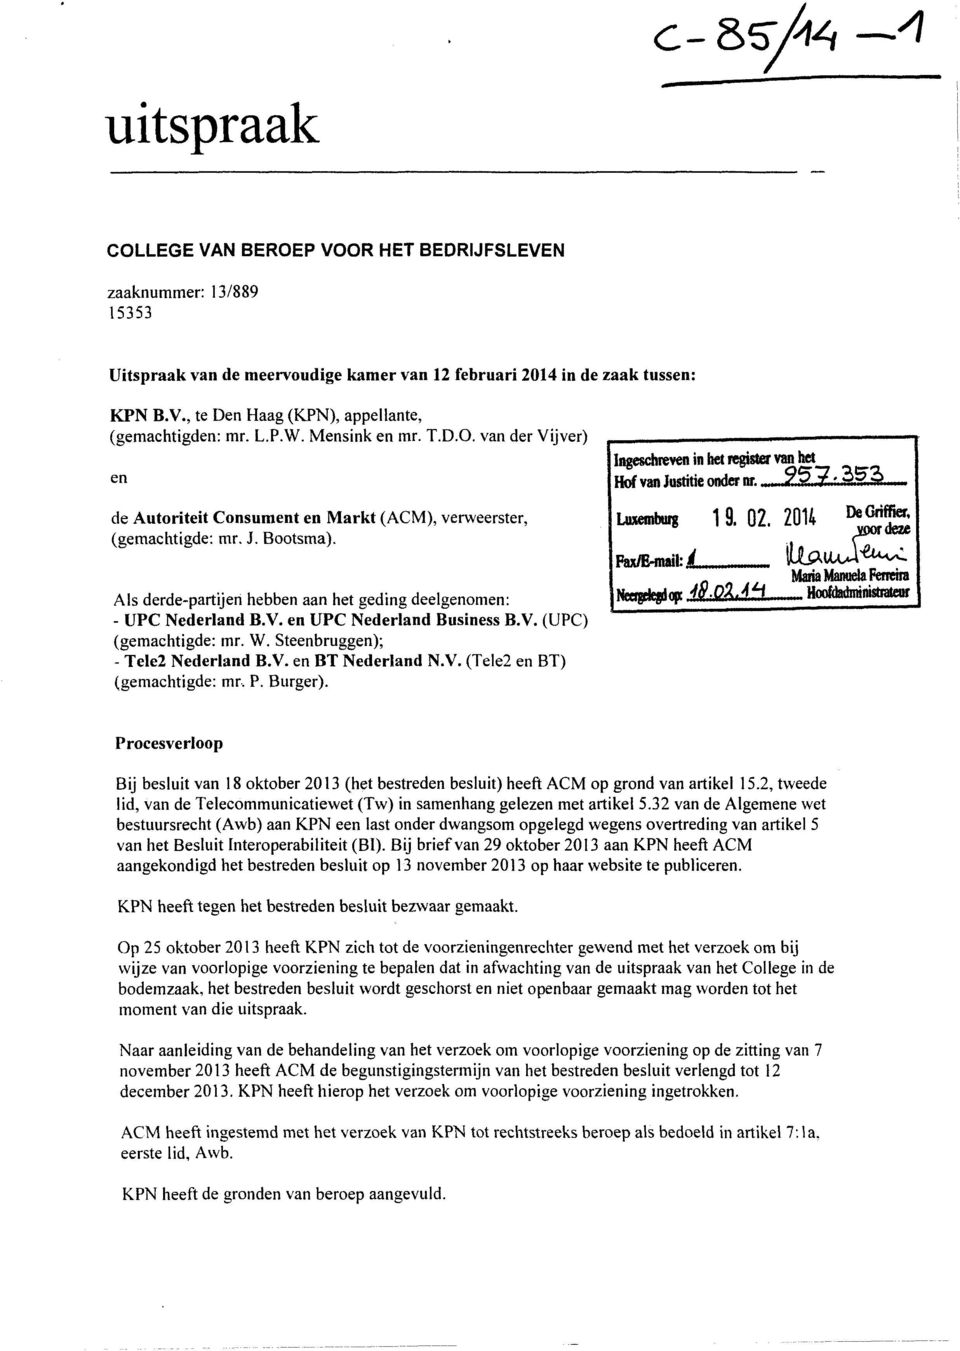 Als derde-partijen hebben aan het geding deelgenomen: - UPC Nederland B.V. en UPC Nederland Business B.V. (UPC) (gemachtigde: mr. W. Steenbruggen); - Tele2 Nederland B.V. en BT Nederland N.V. (Tele2 en BT) (gemachtigde: rnr, P.